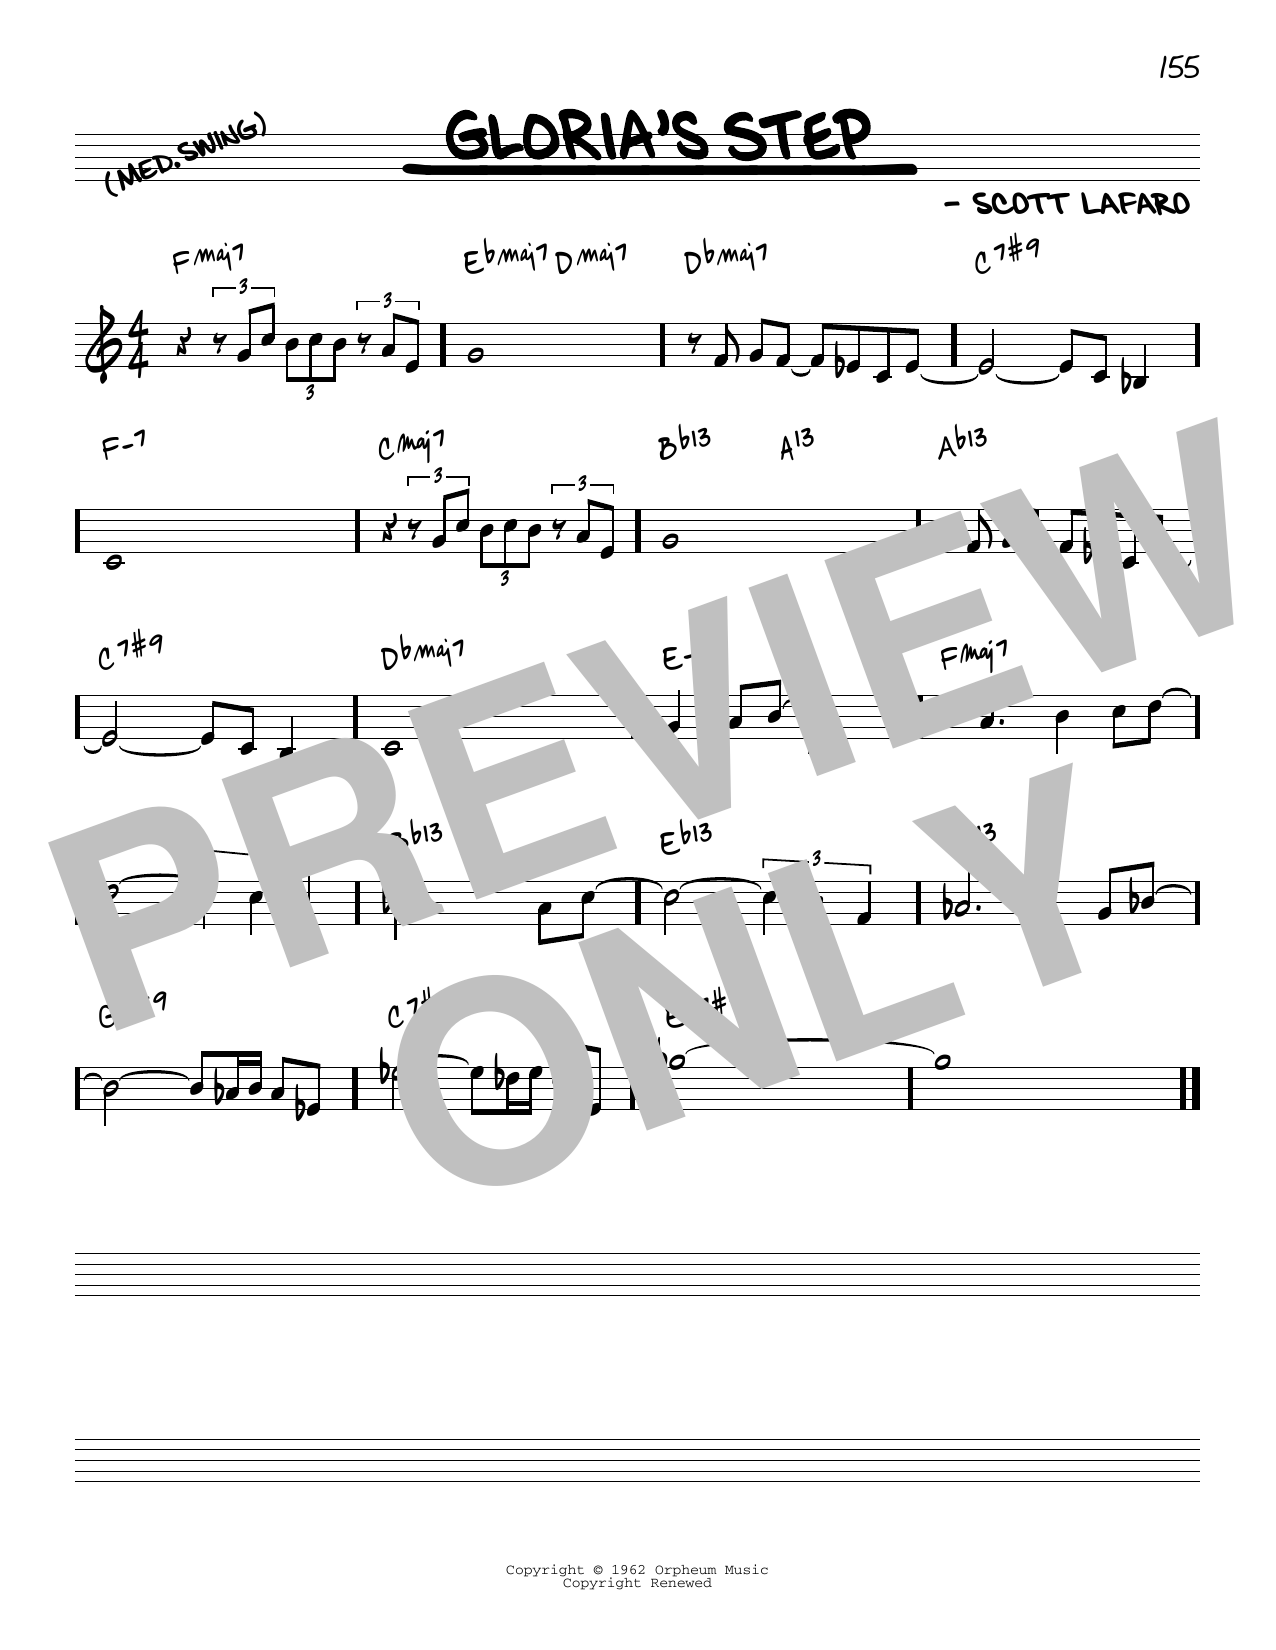 Download Scott LeFaro Gloria's Step [Reharmonized version] (a Sheet Music